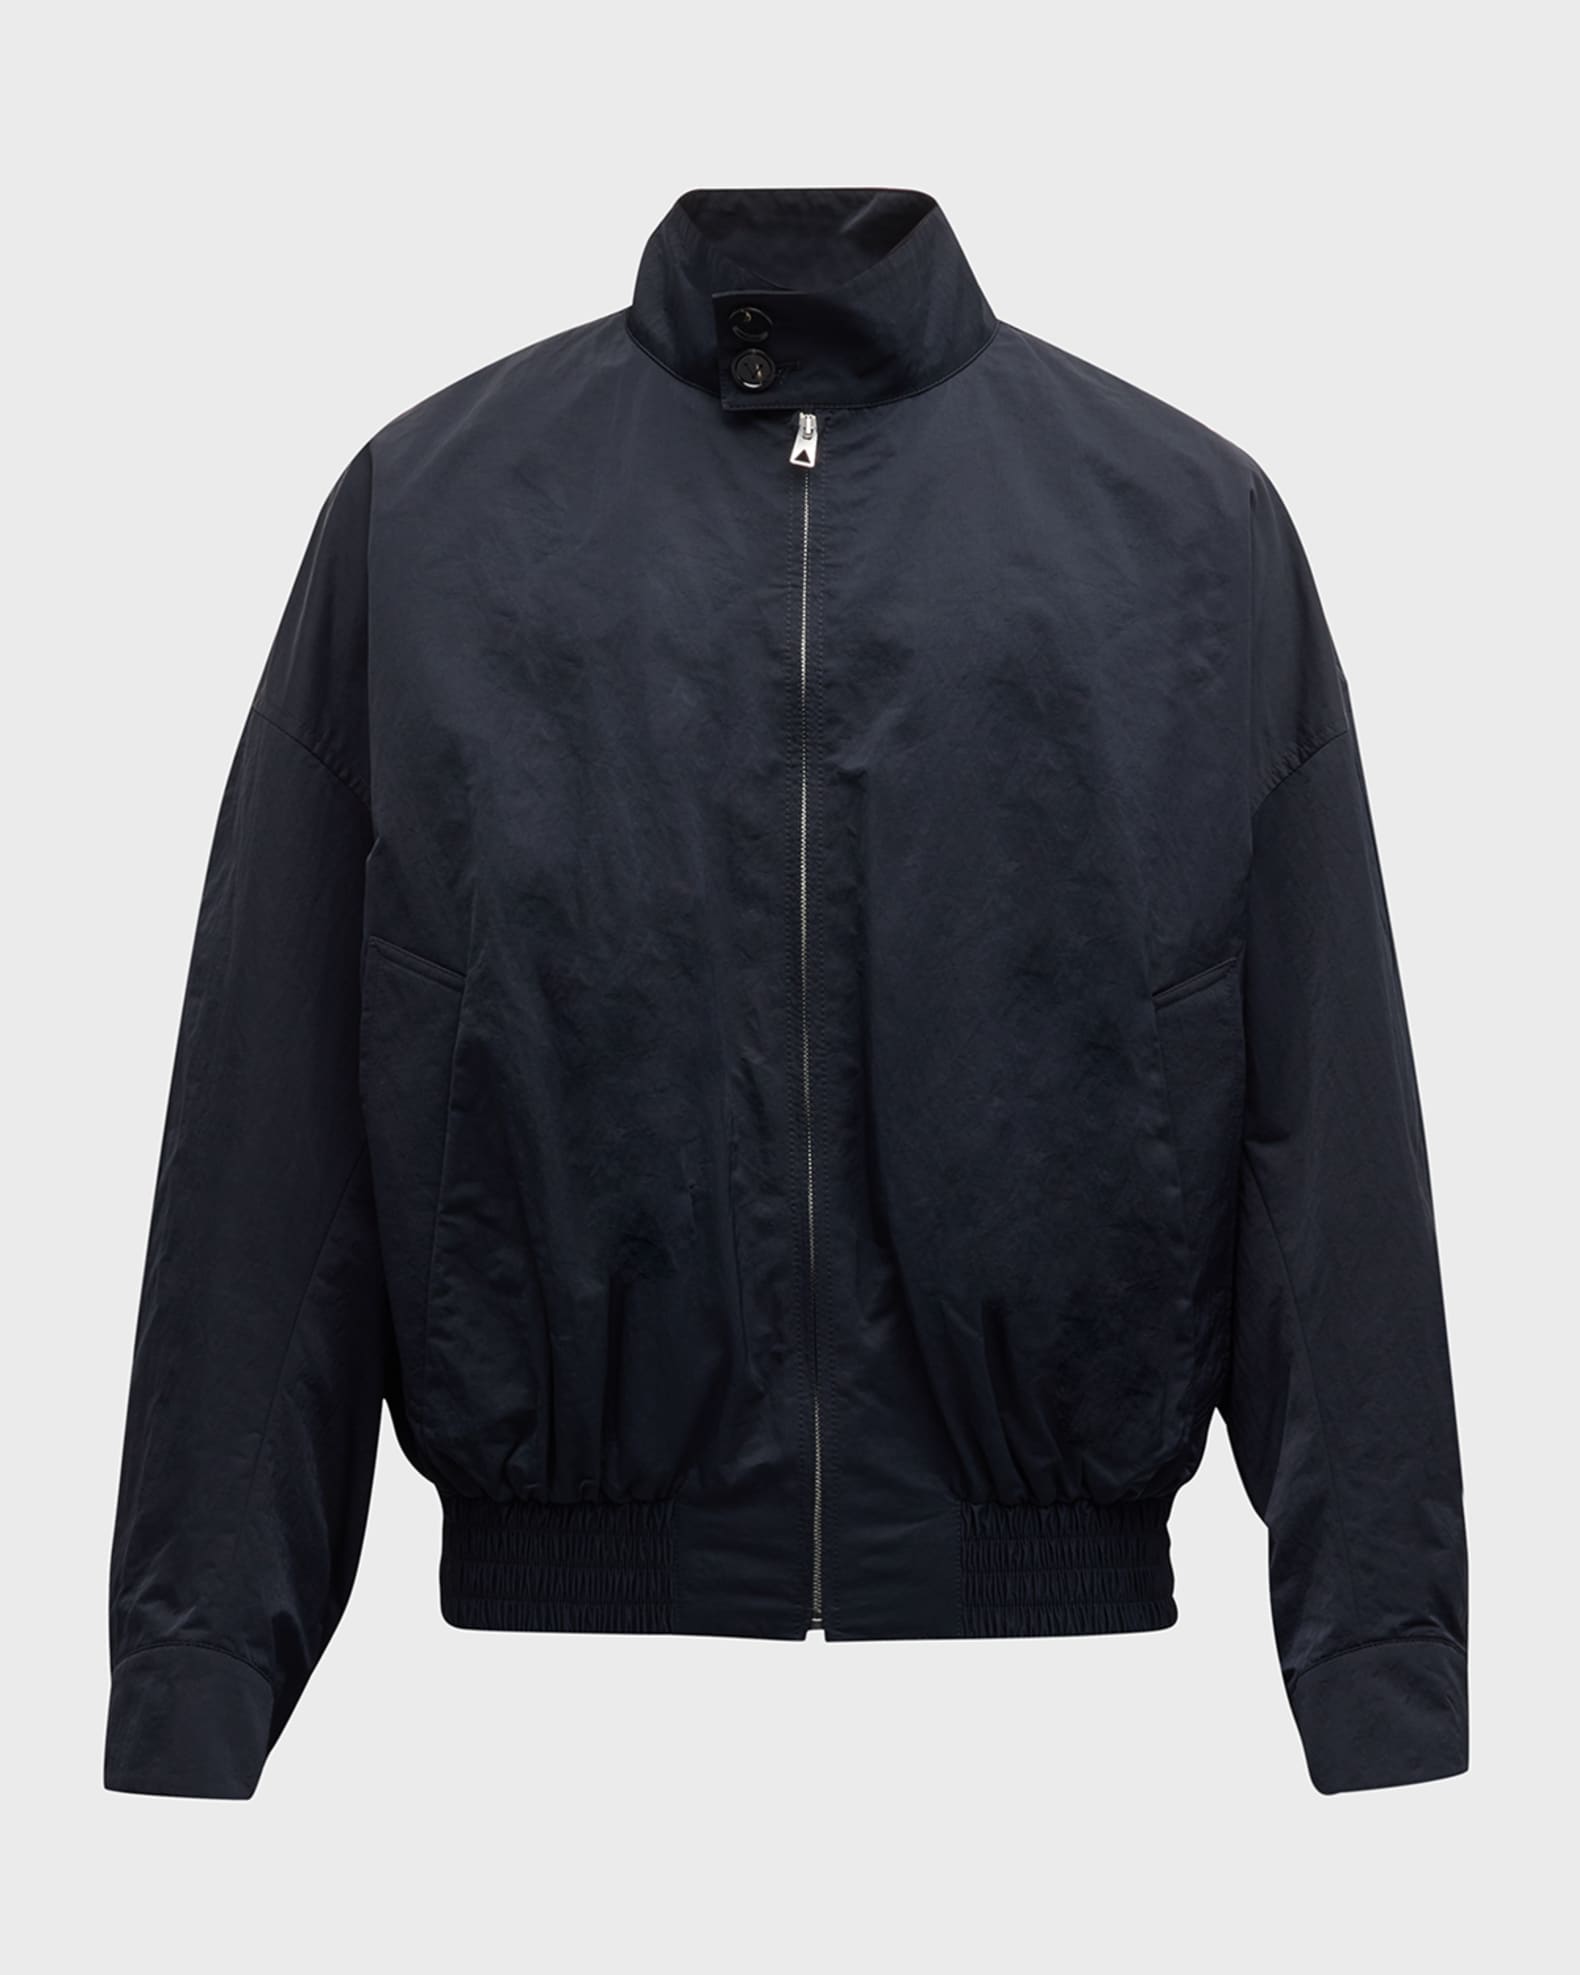 Bottega Veneta Men’s Technical Nylon Blouson Jacket | Neiman Marcus